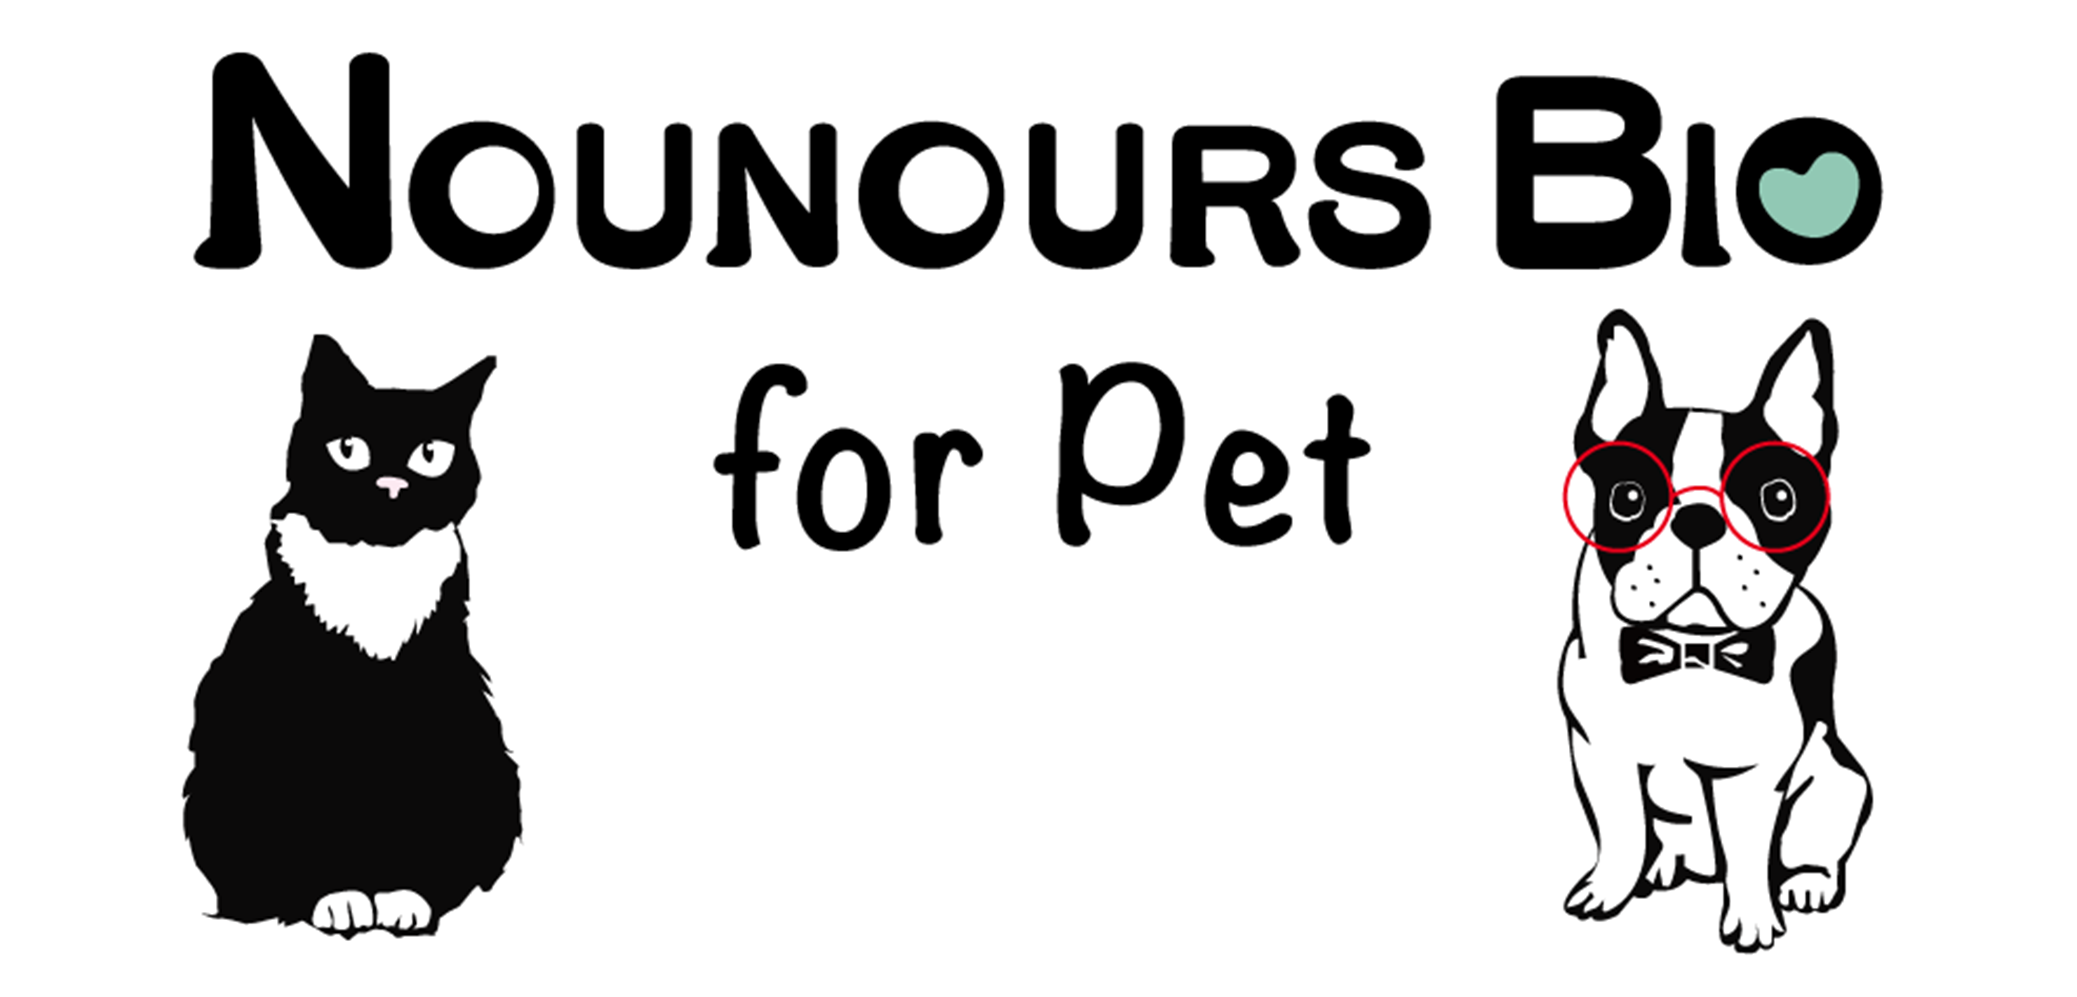 NOUNOURS Bio for pet